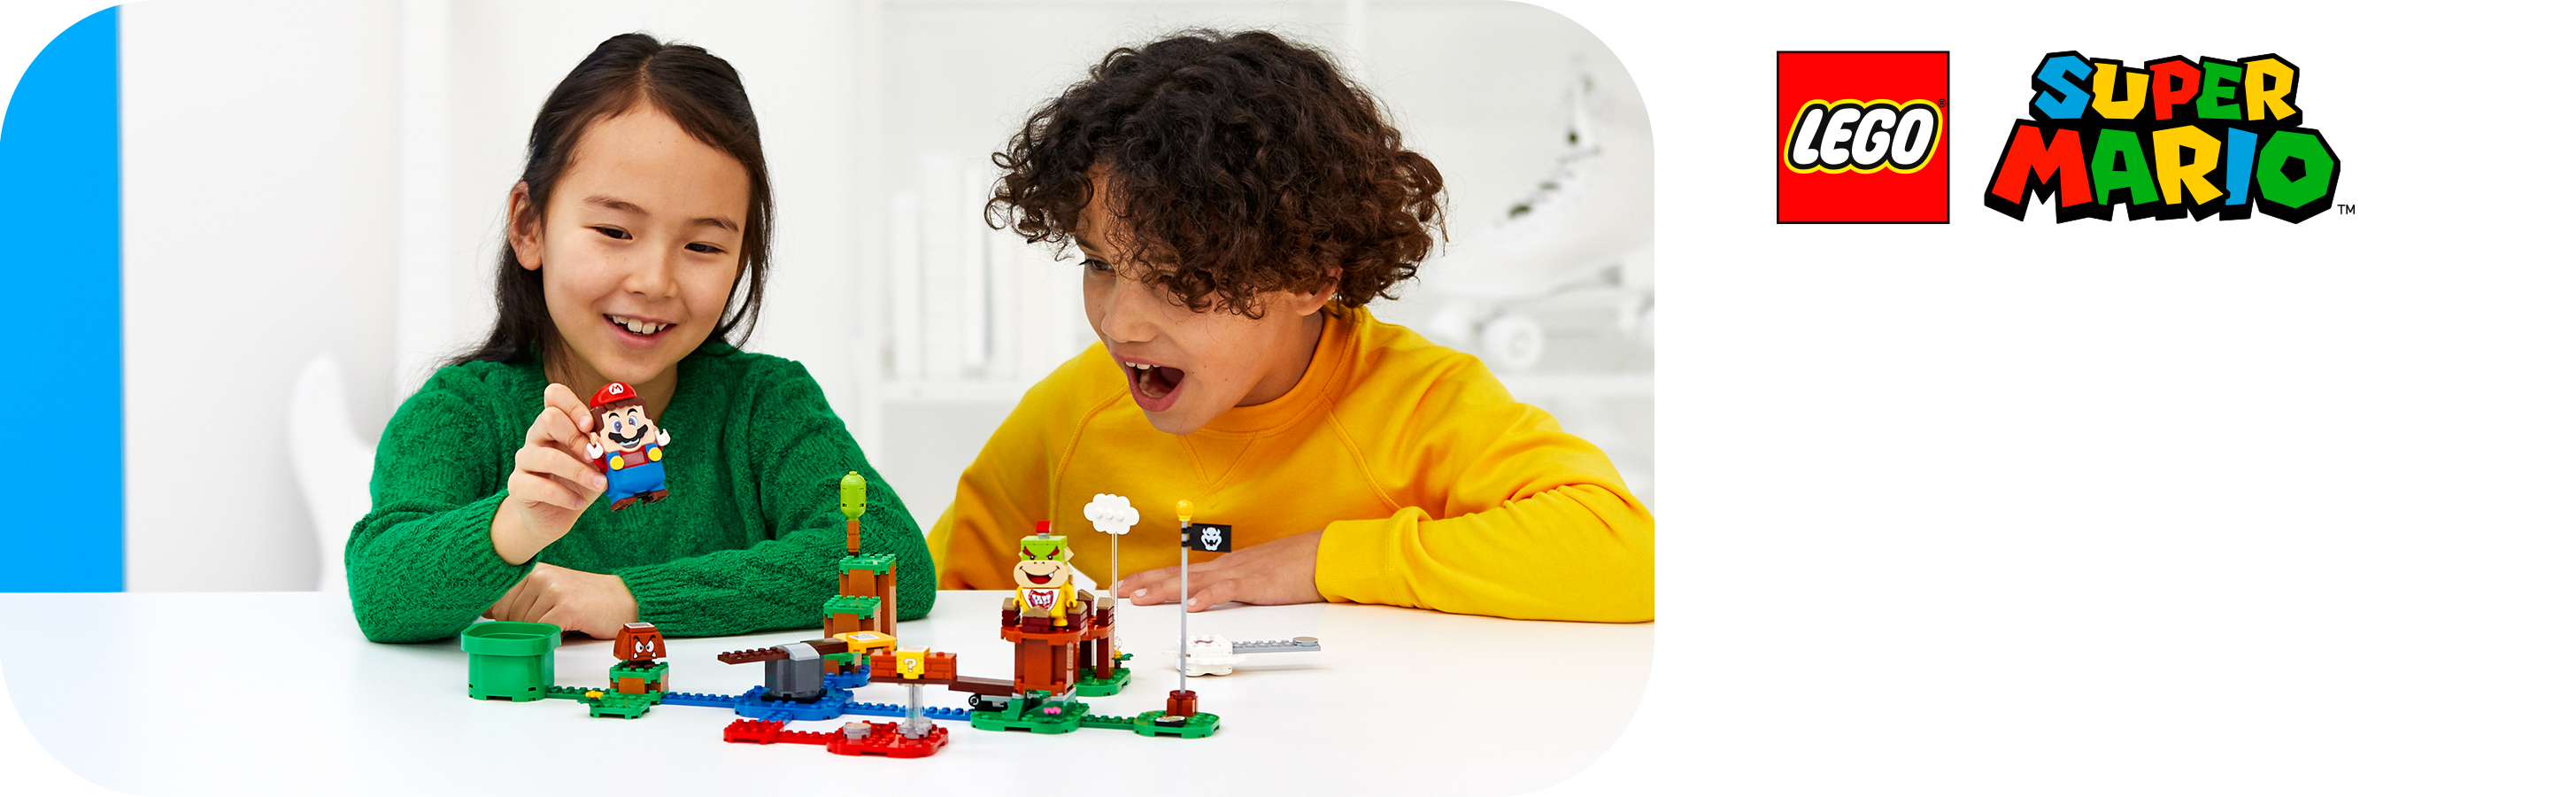 Dobrodružství s LEGO® Mariem u vás doma!